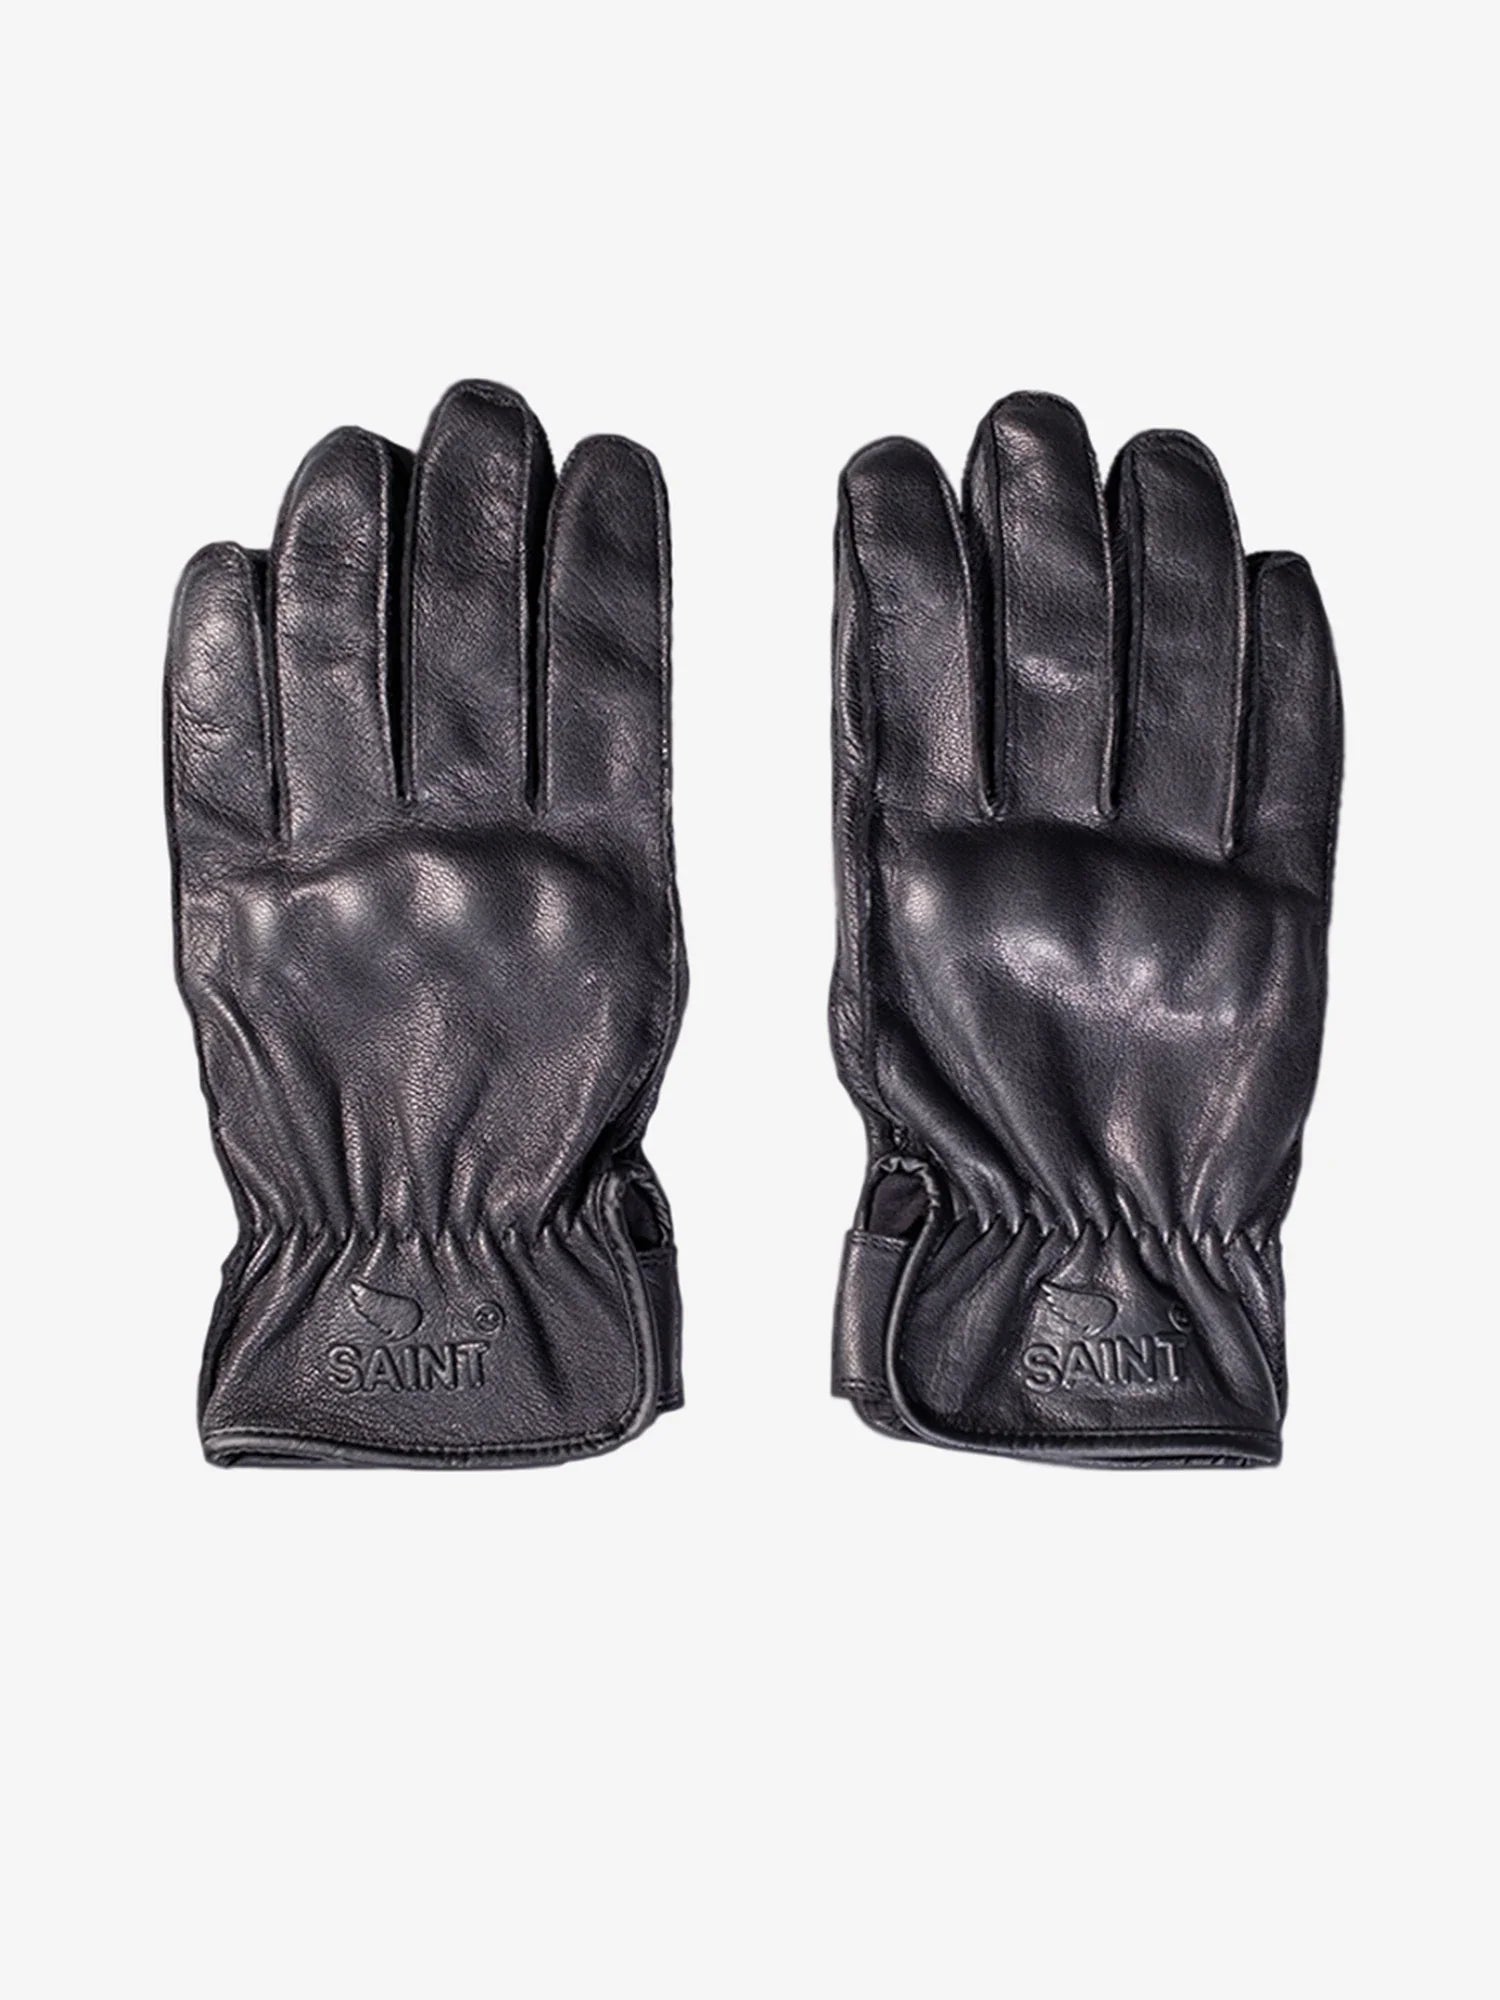 SA1NT Inside Out Gloves - SA1NT